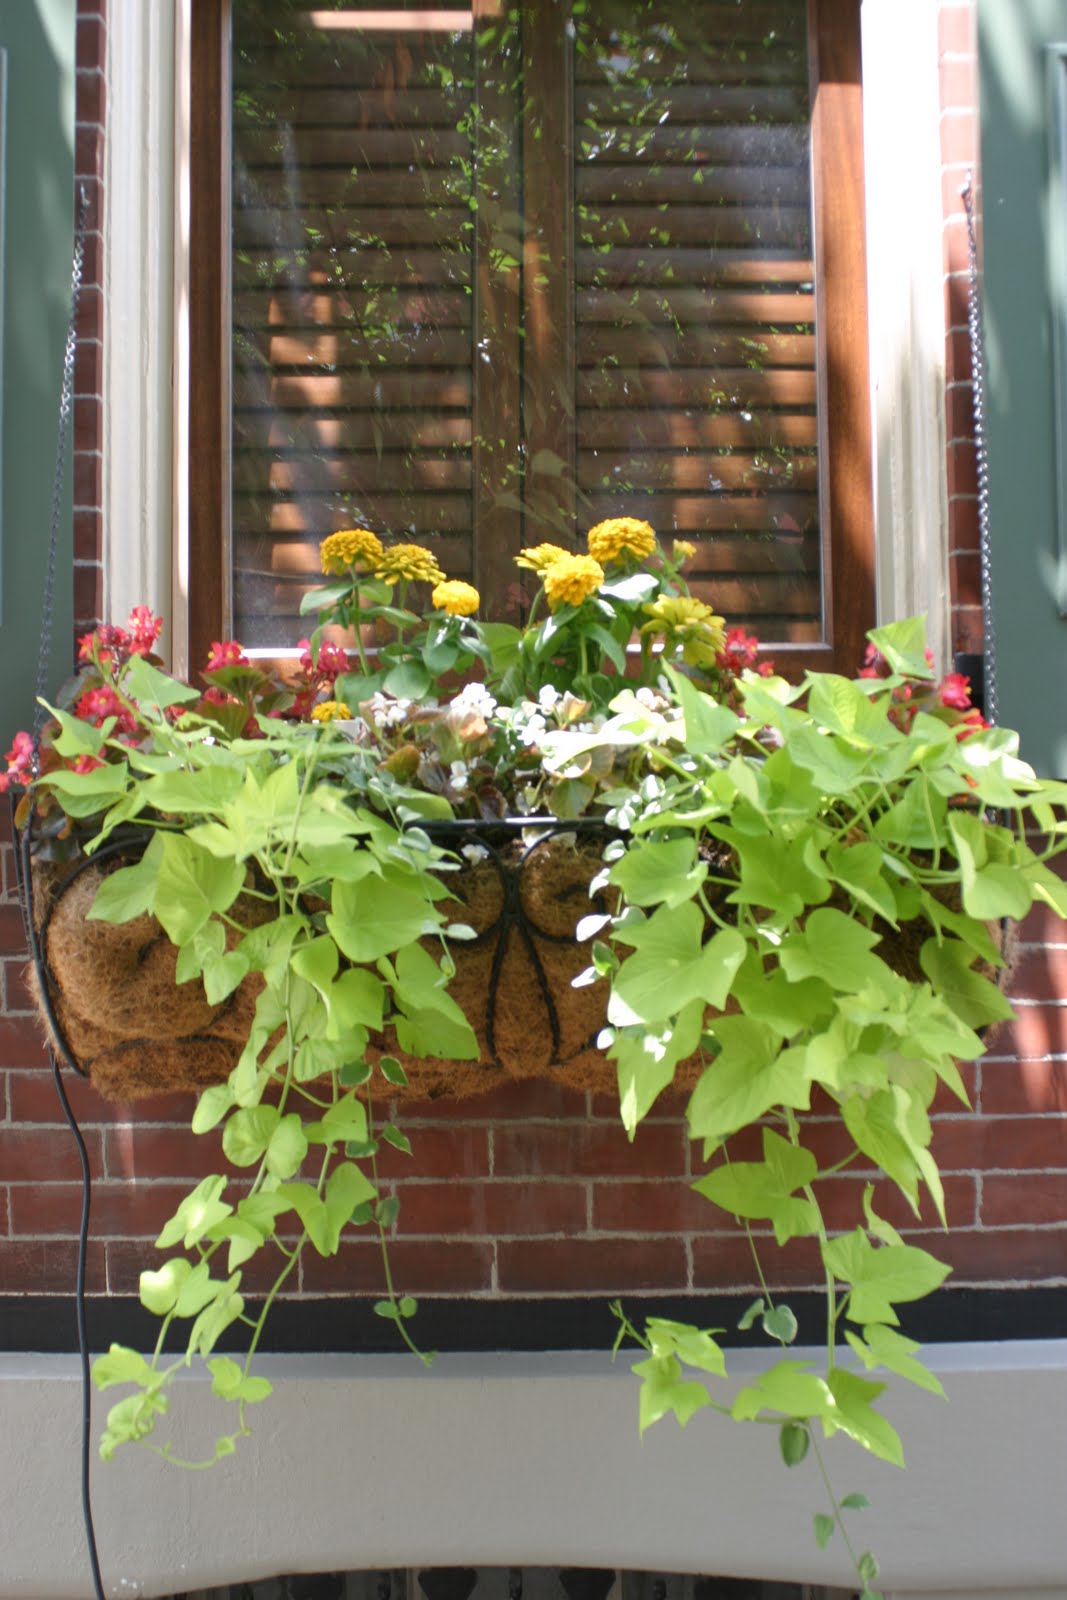 Julie's Journeys: Philadelphia: Window Flower Boxes